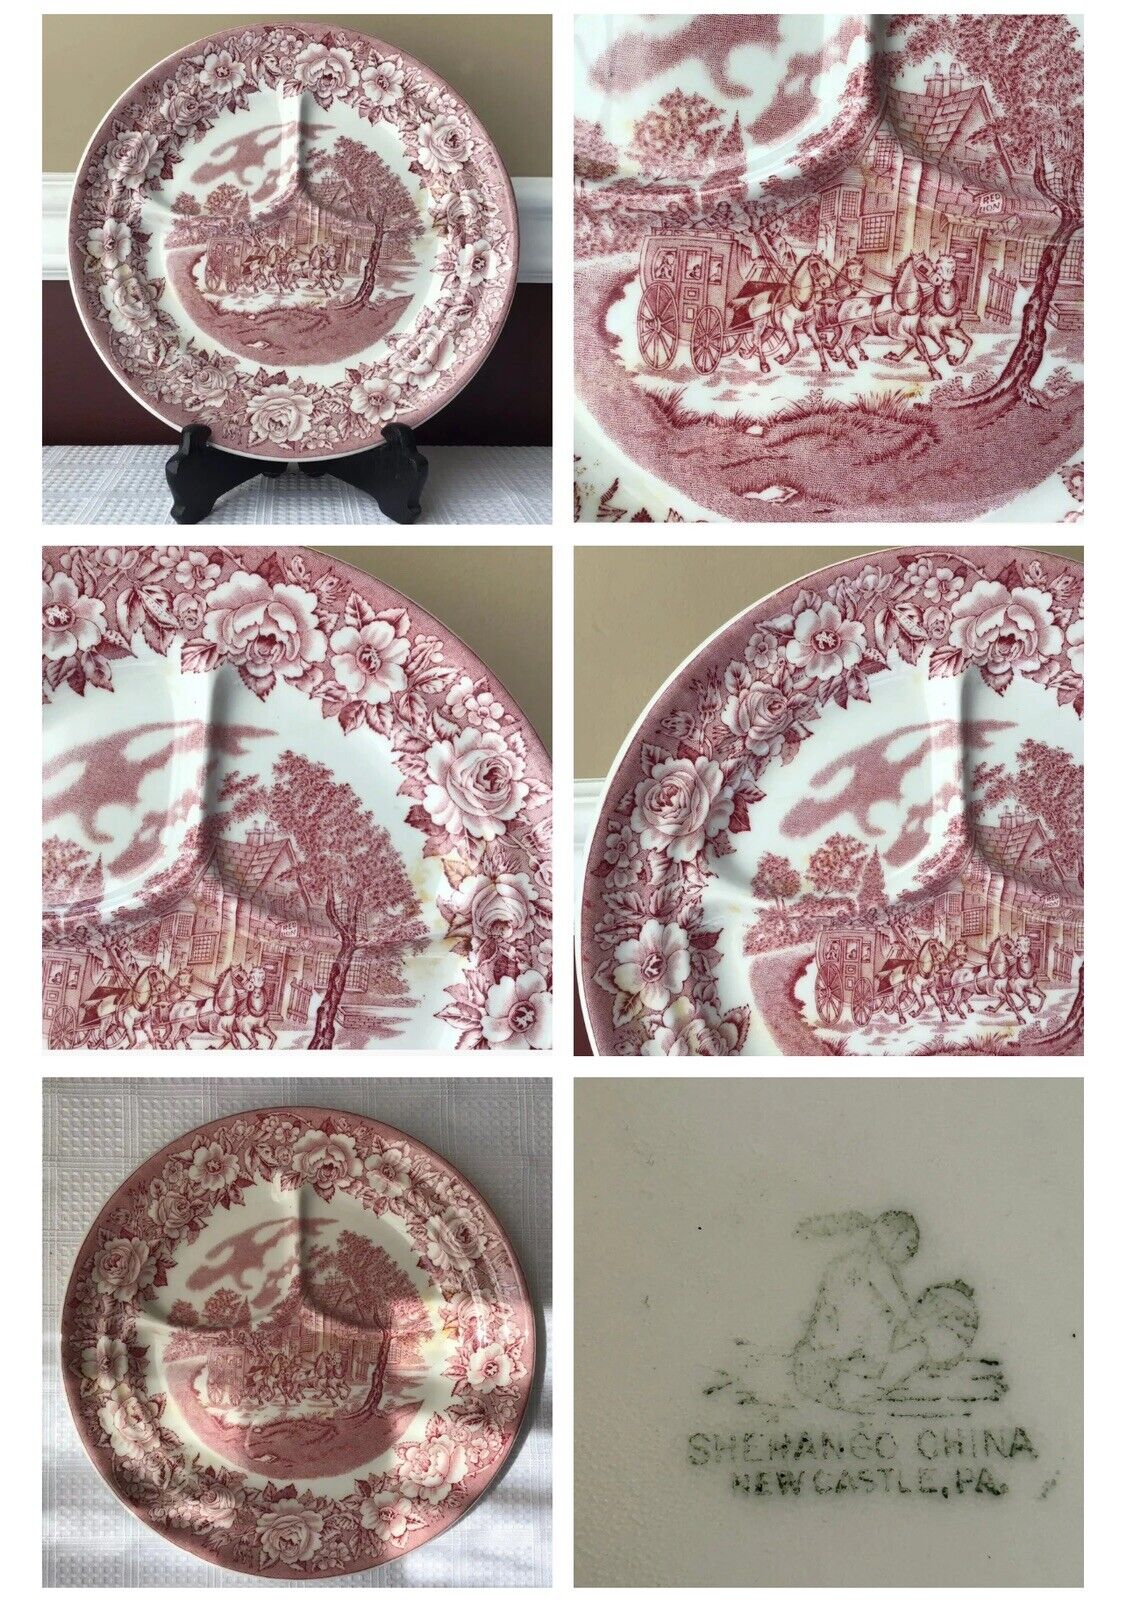 Vintage Shenango China New Castle, PA U.S.A Porcelain Plate With 3 Sections